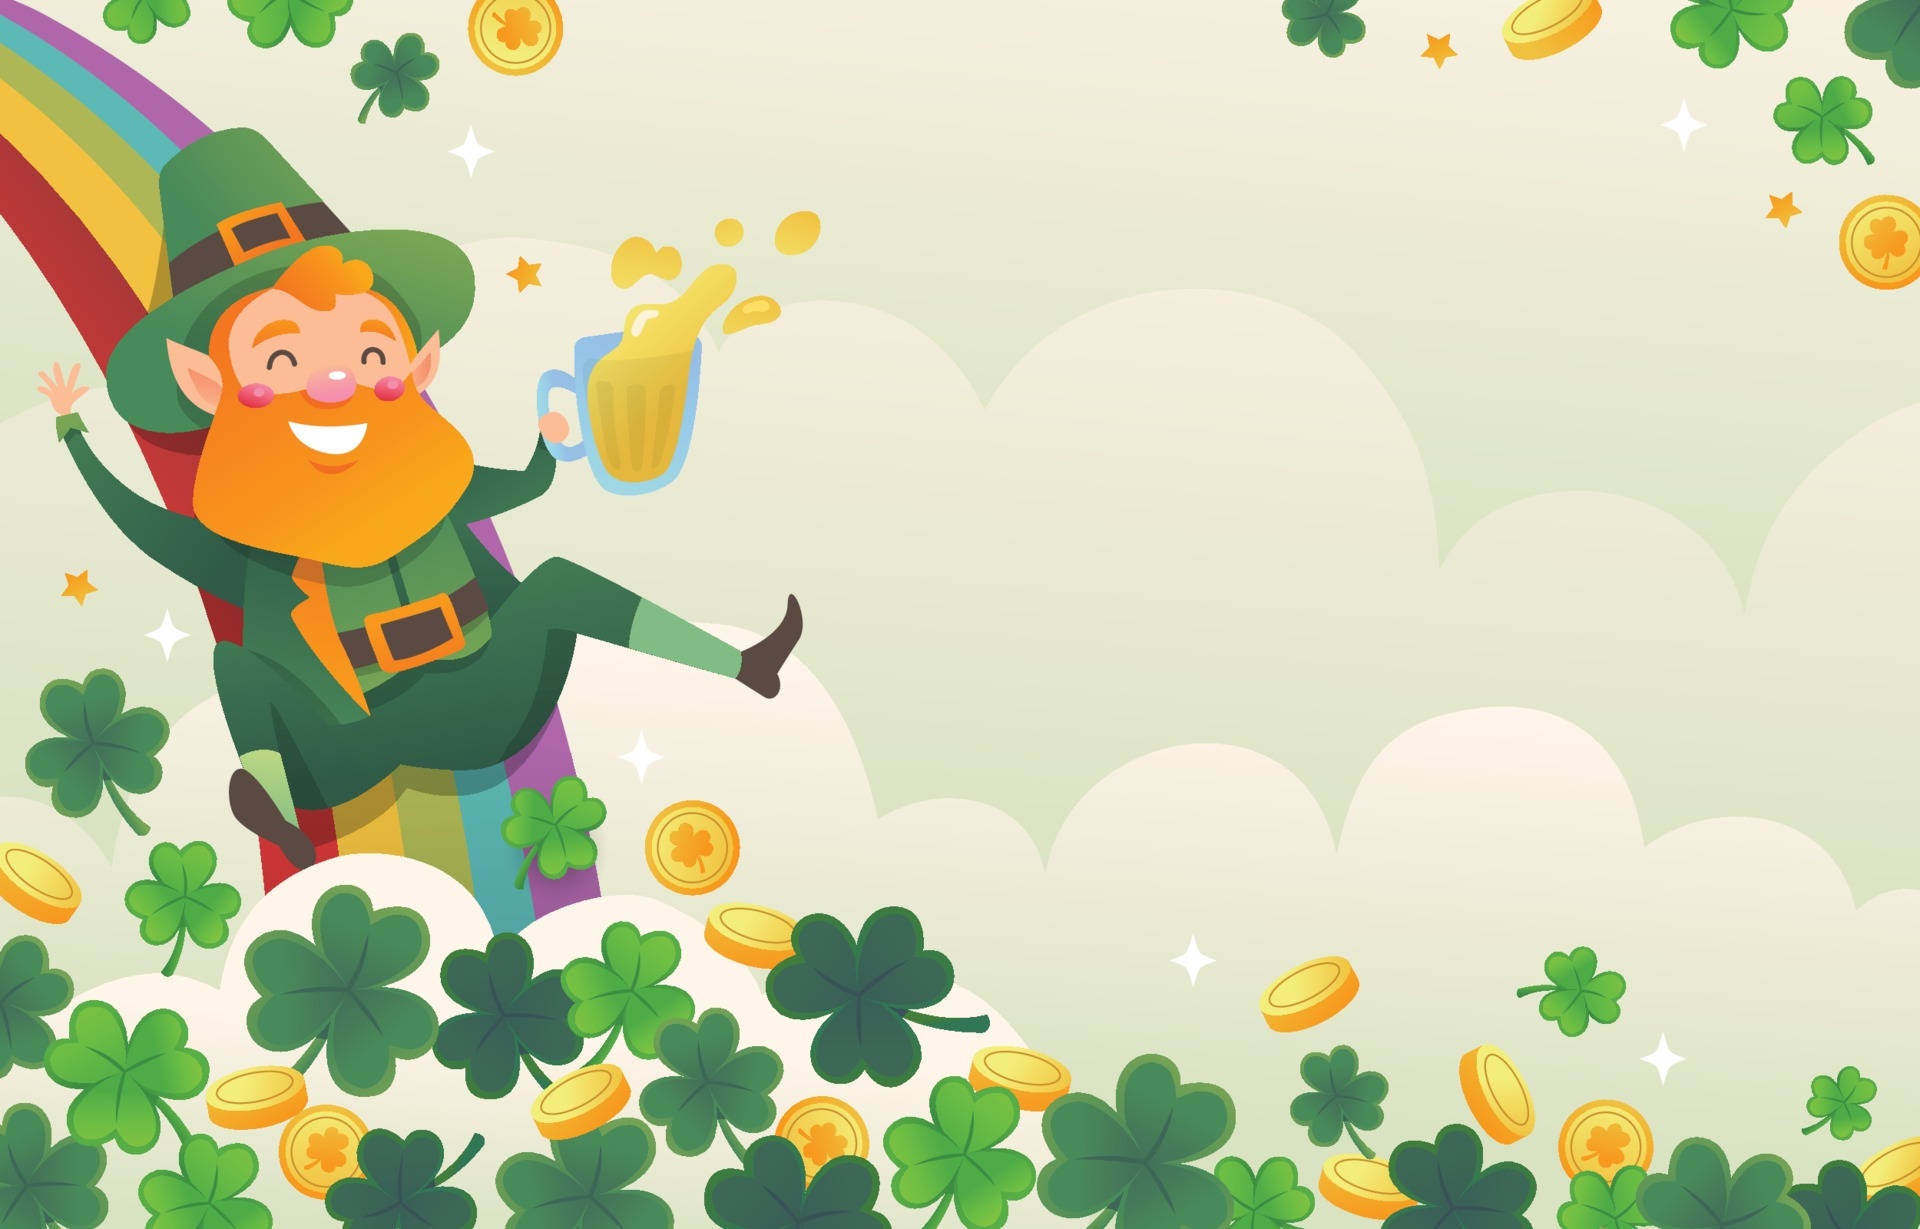 Saint Patrick’s Day With Cartoon Leprechaun Picture